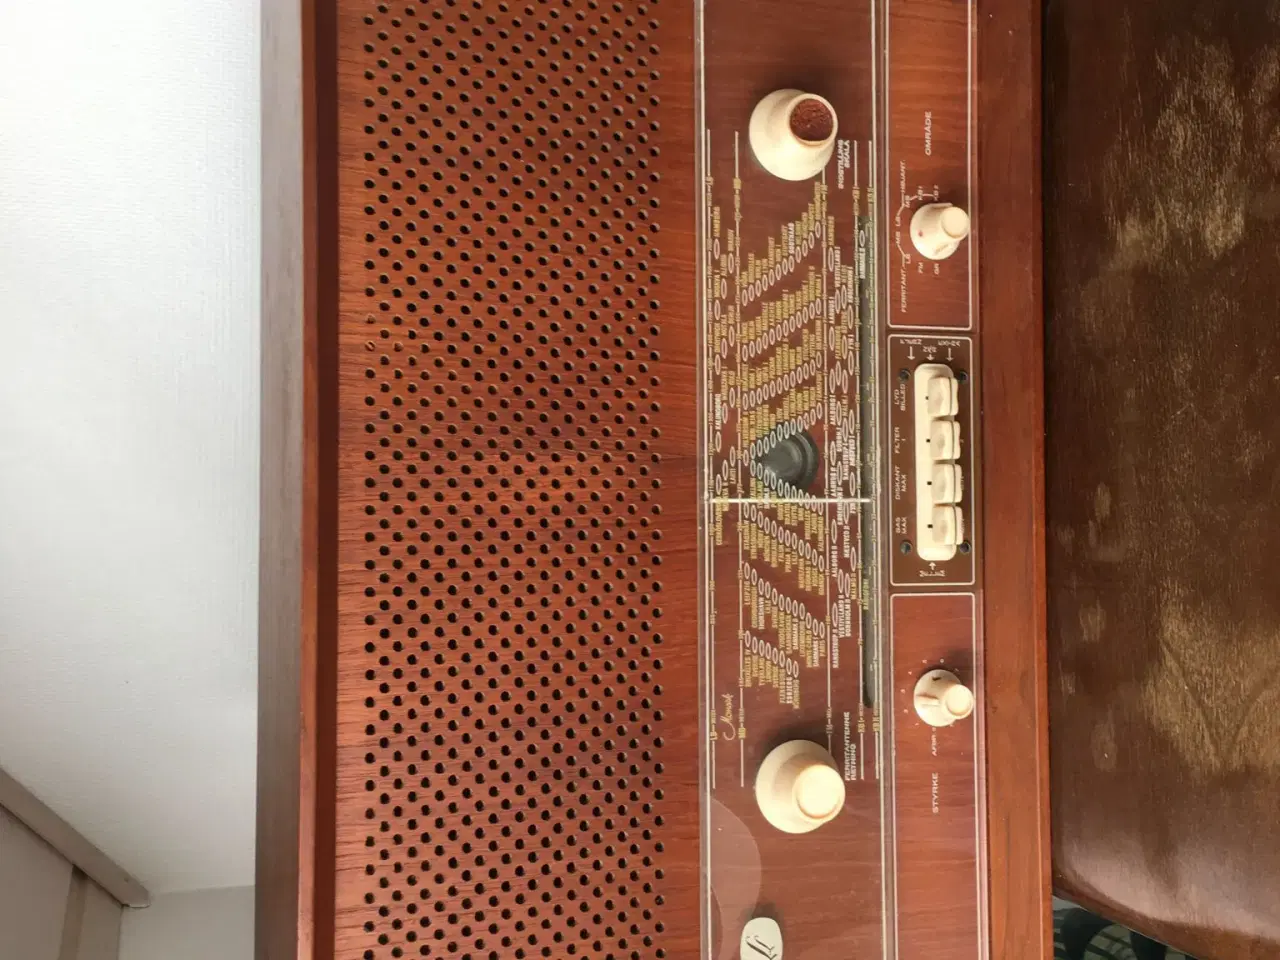 Billede 1 - Monark radio